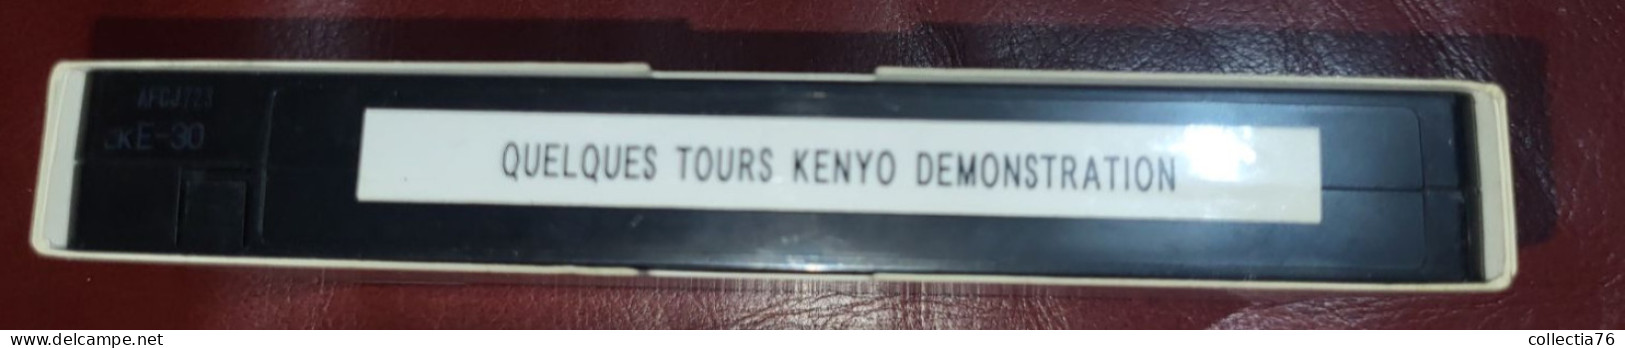 RARE CASSETTE VIDEO VHS MAGIE QUELQUES TOURS KENYO DEMONSTRATION 30 MINUTES ENVIRON - Documentales